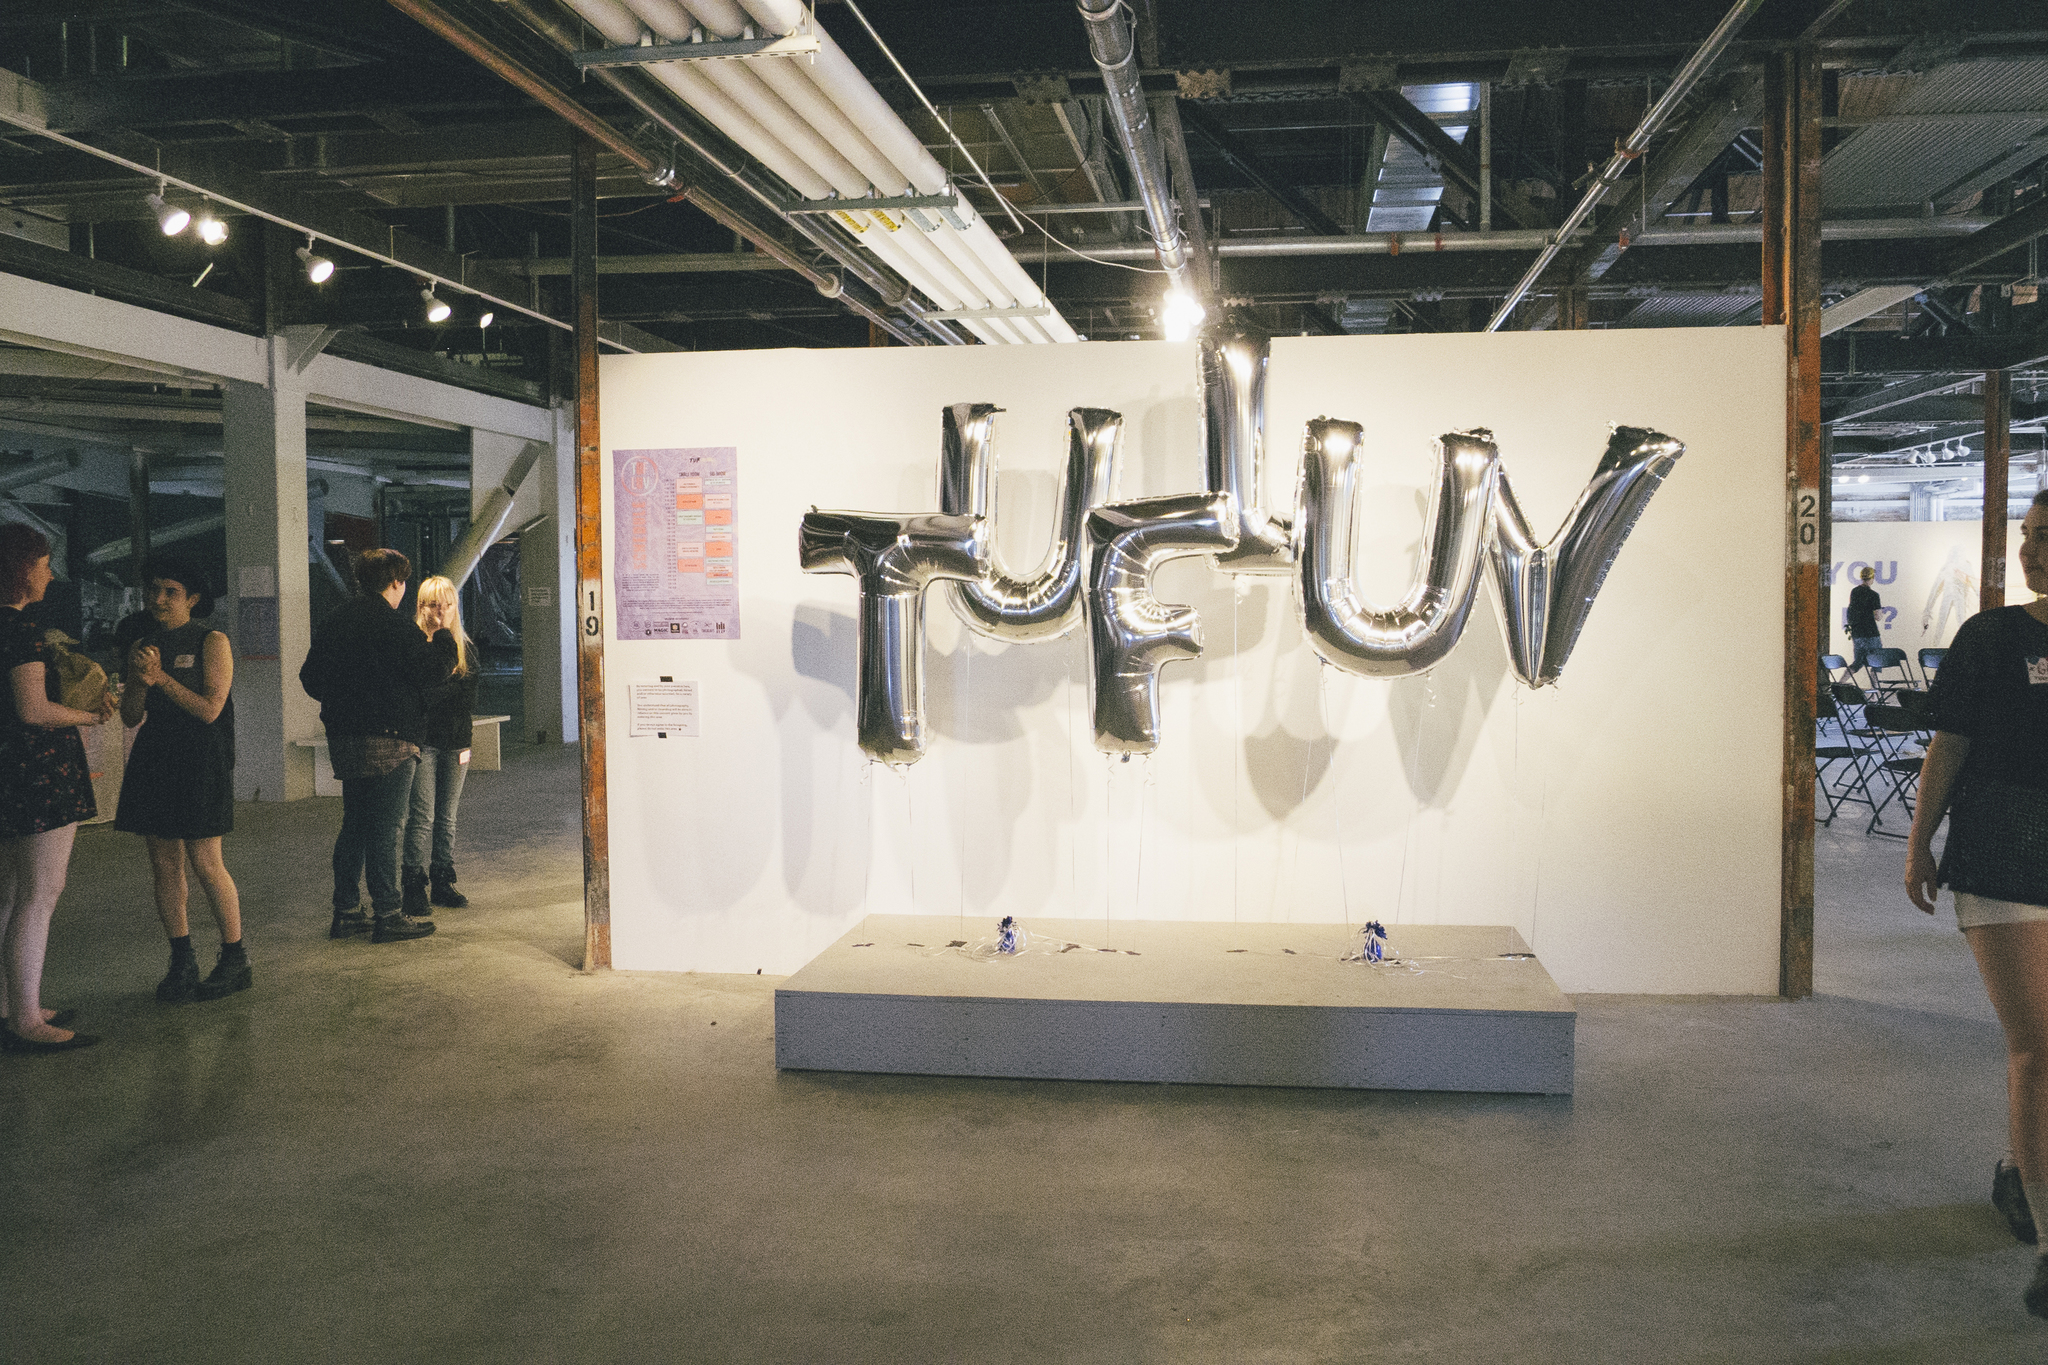 Dancing, Flickering Computers and Interactive Art at TUF LUV